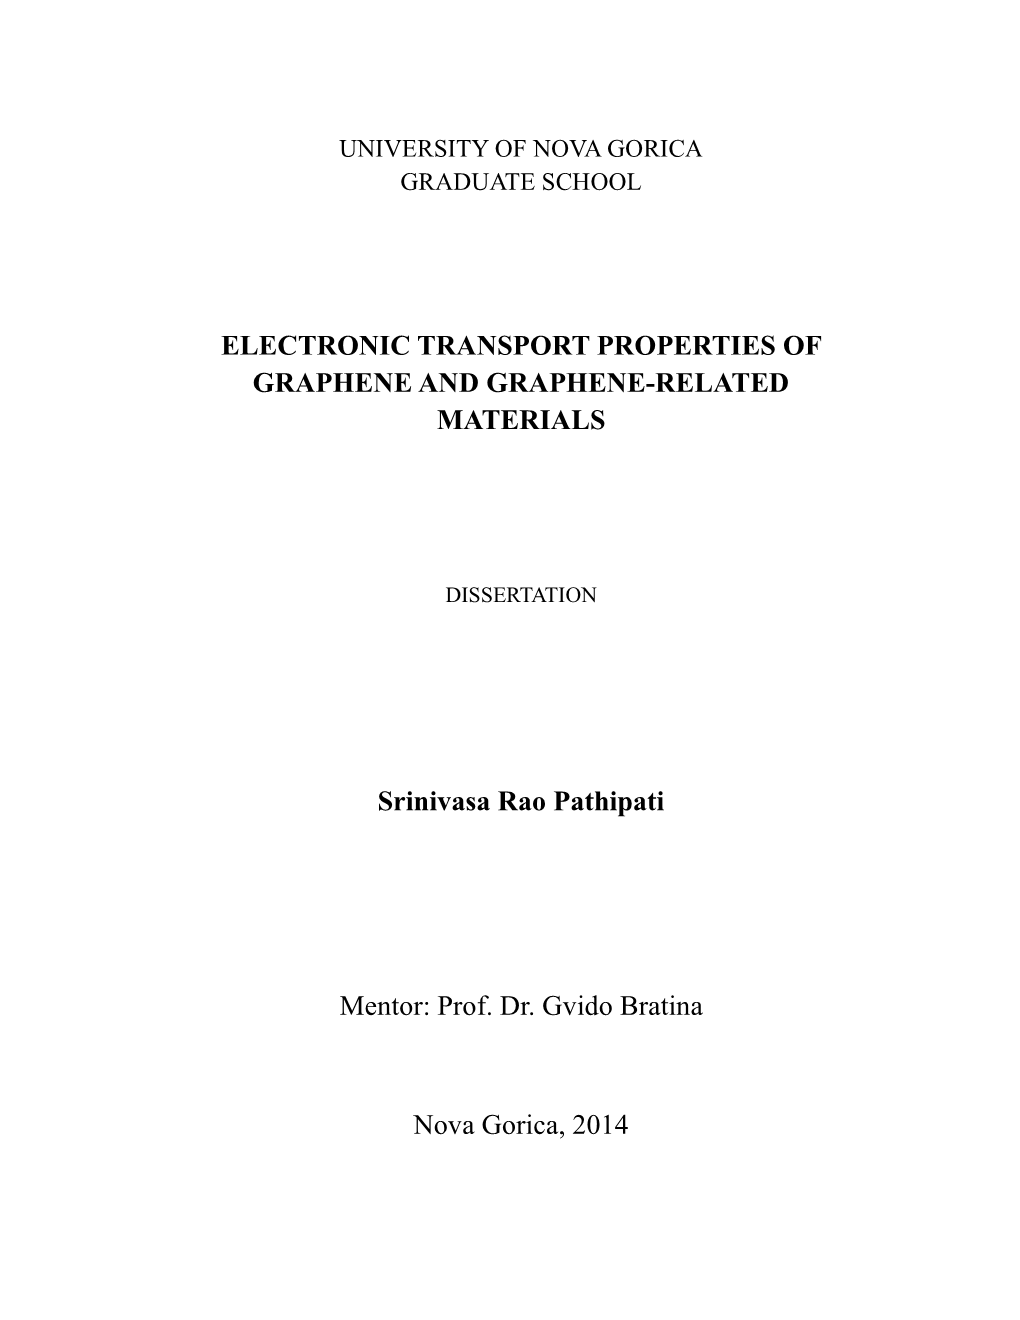 ELECTRONIC TRANSPORT PROPERTIES of GRAPHENE and GRAPHENE-RELATED MATERIALS Srinivasa Rao Pathipati Mentor: Prof. Dr. Gvido Brat